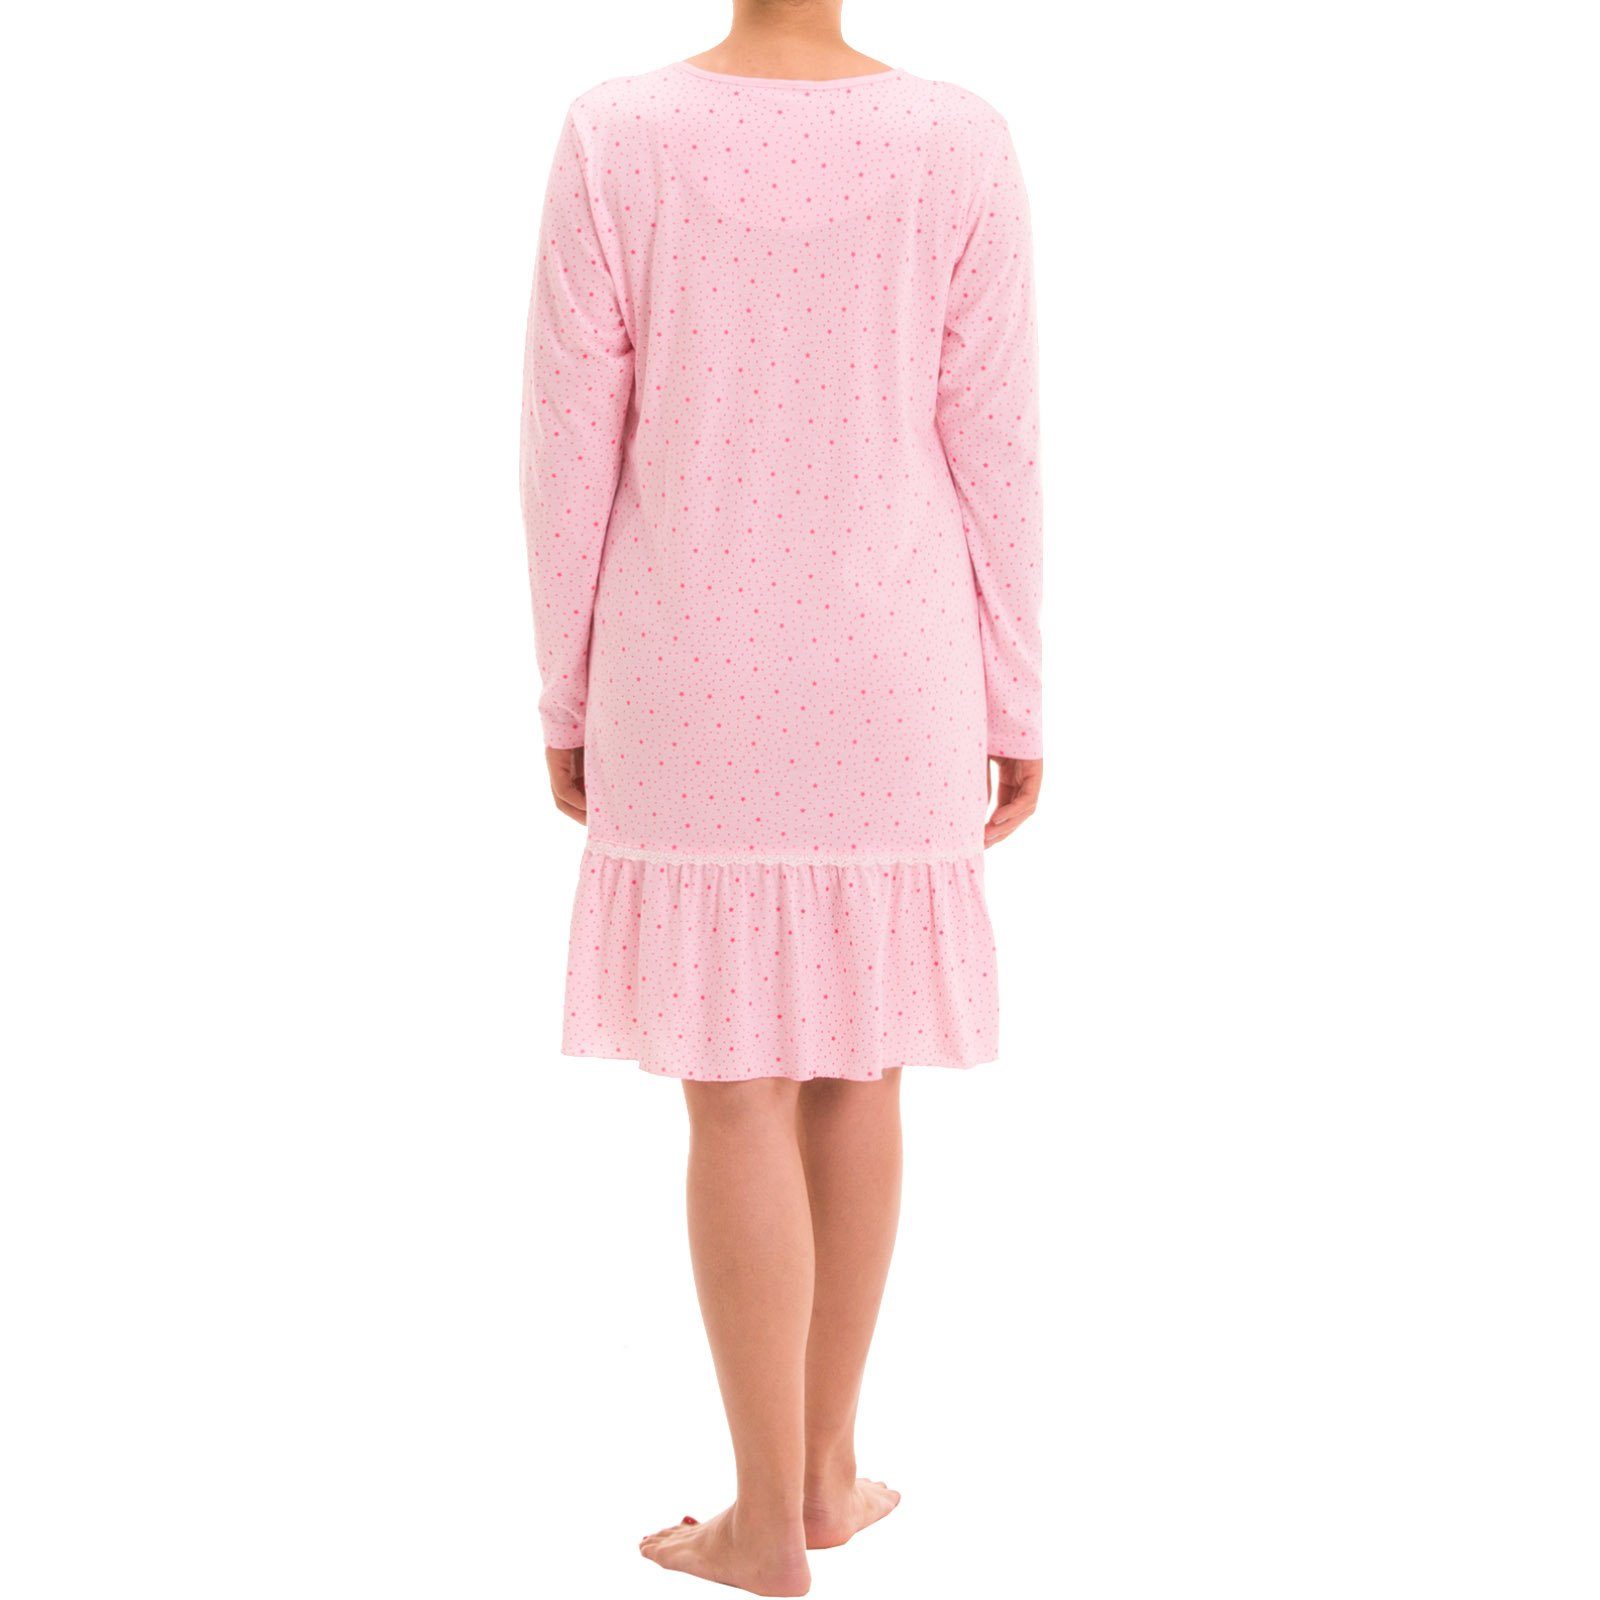 Nachthemd Langarm Spitze rosa zeitlos Rüschenrock - Nachthemd